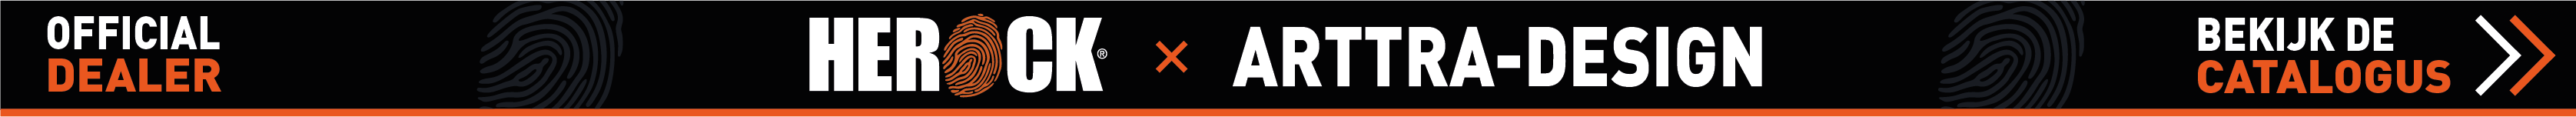 www.arttra-design.be